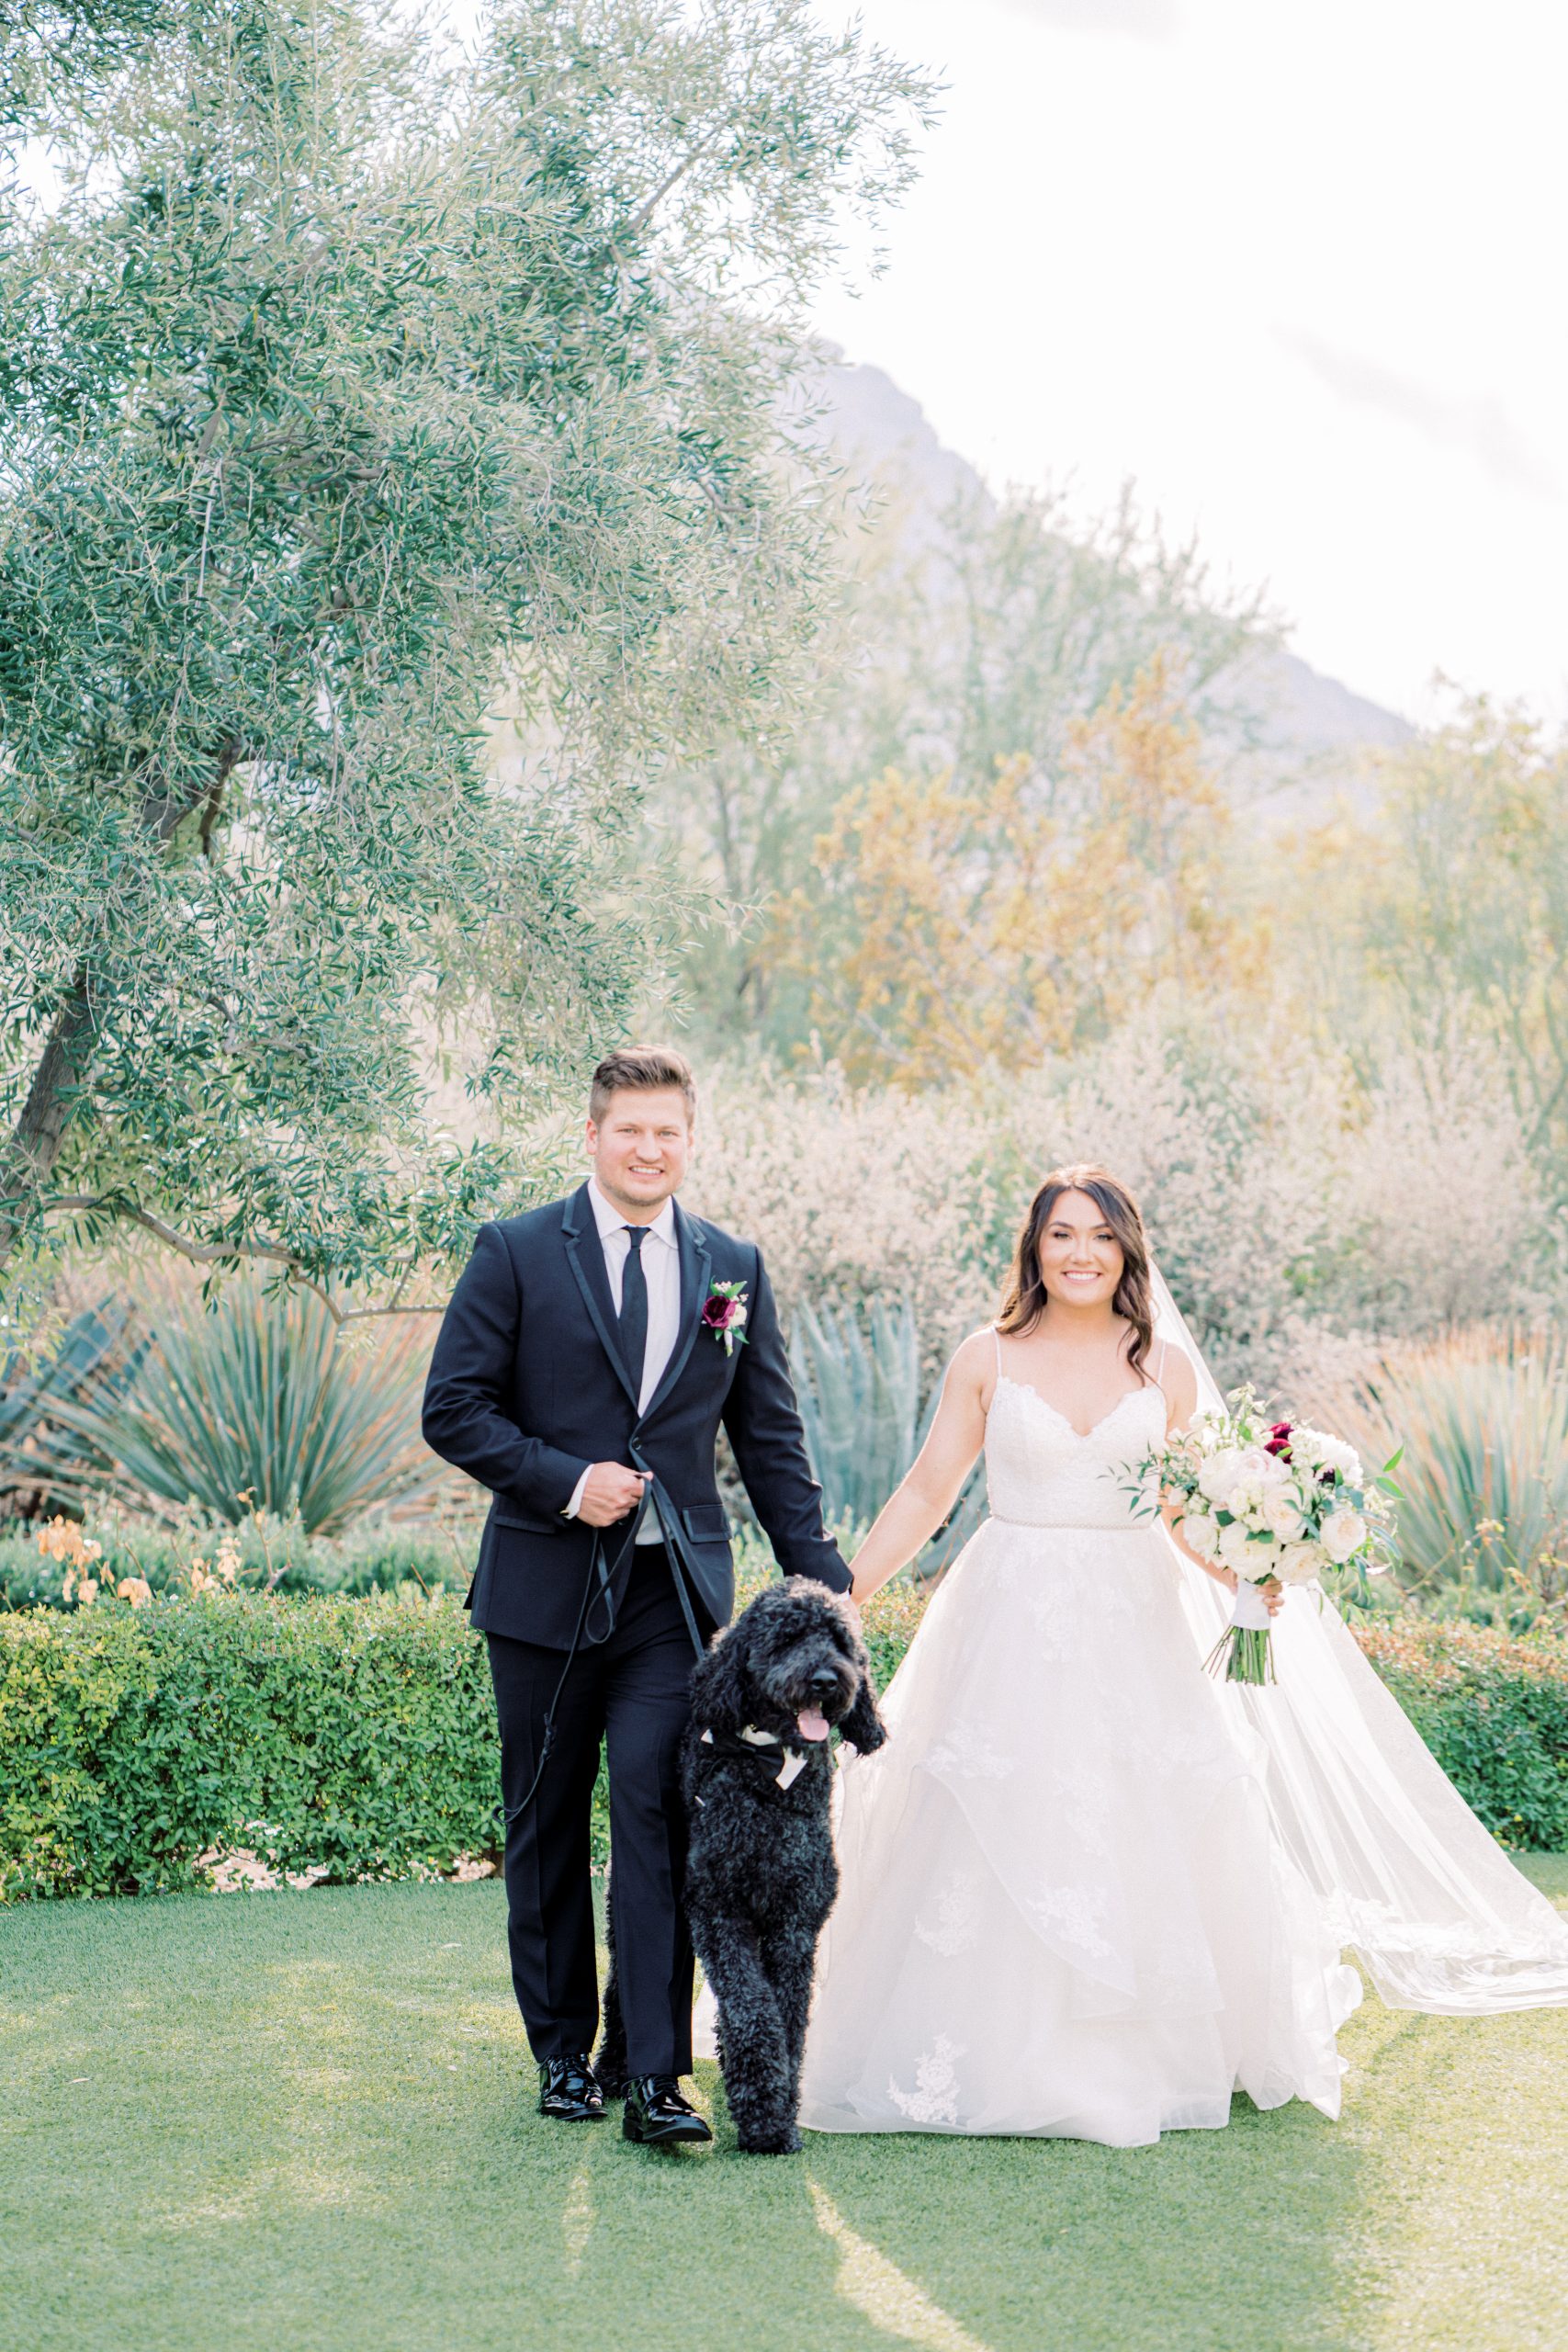 El Chorro Bride and Groom with Dog